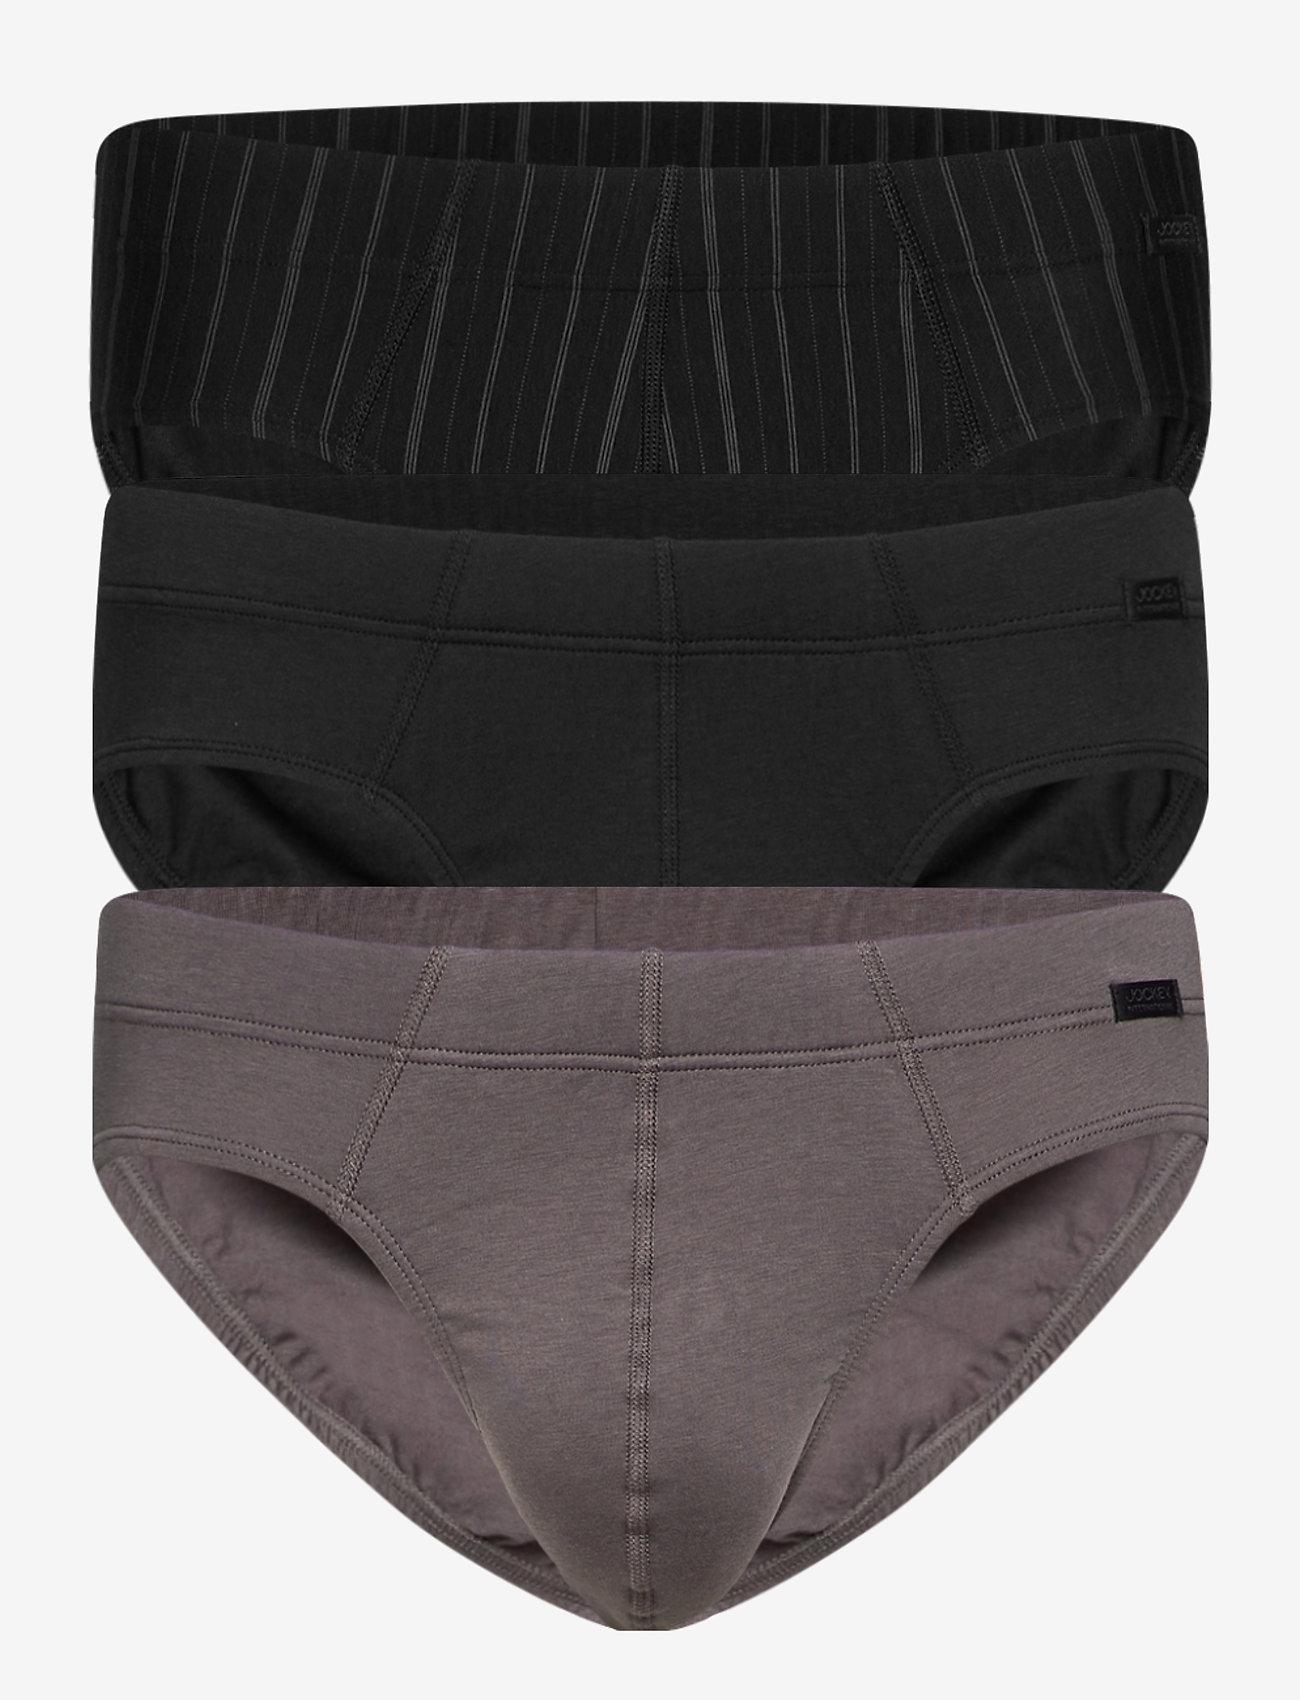 Jockey - Cotton+ Brief 3-p - multipack underpants - grey - 0